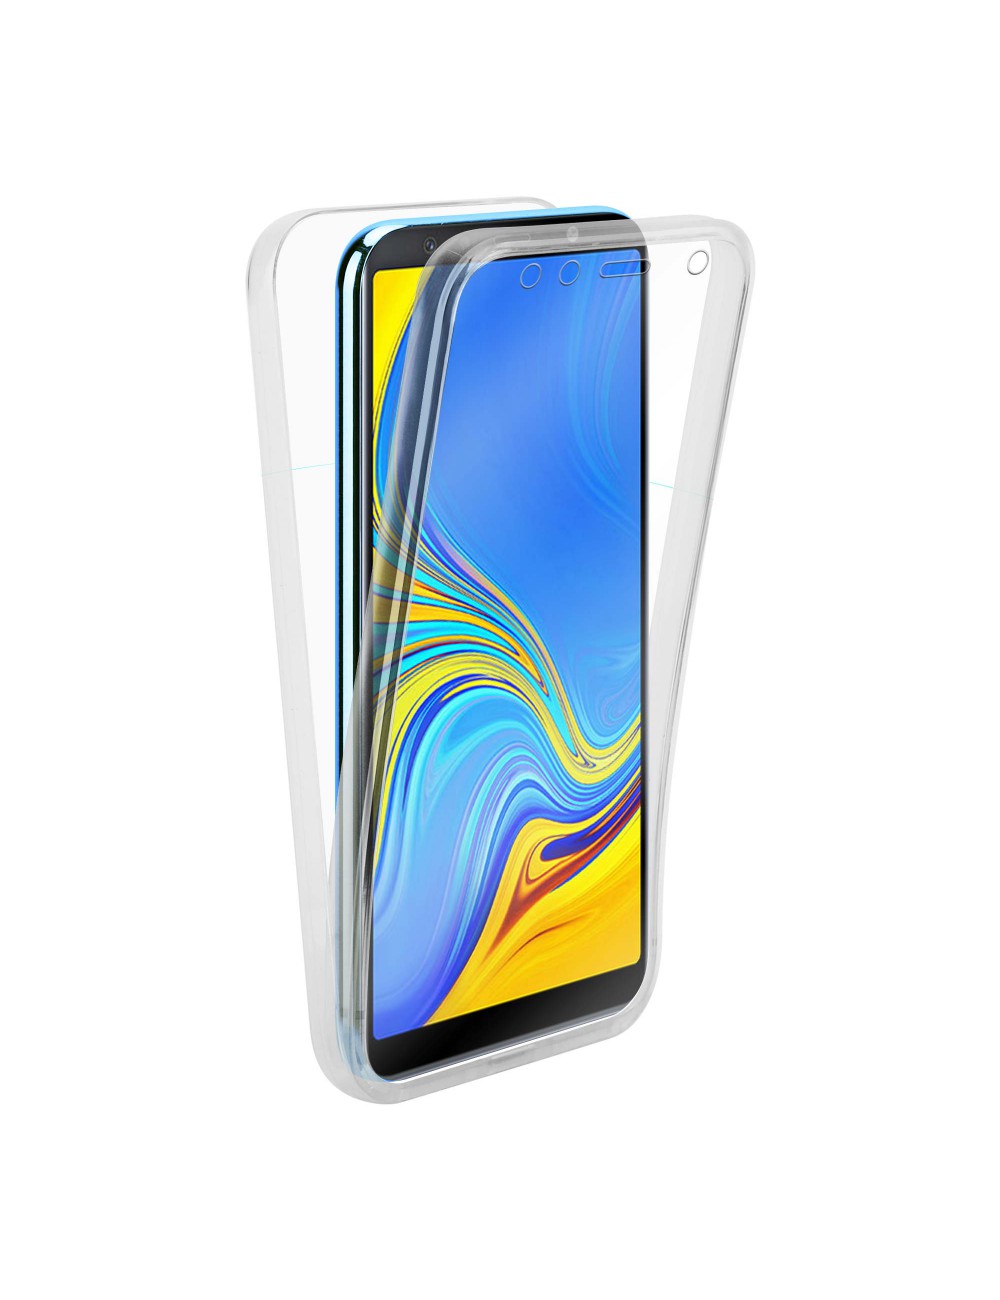 rivier Erge, ernstige zoet Samsung Galaxy A7 (2018) 360° clear PC + TPU hoesje